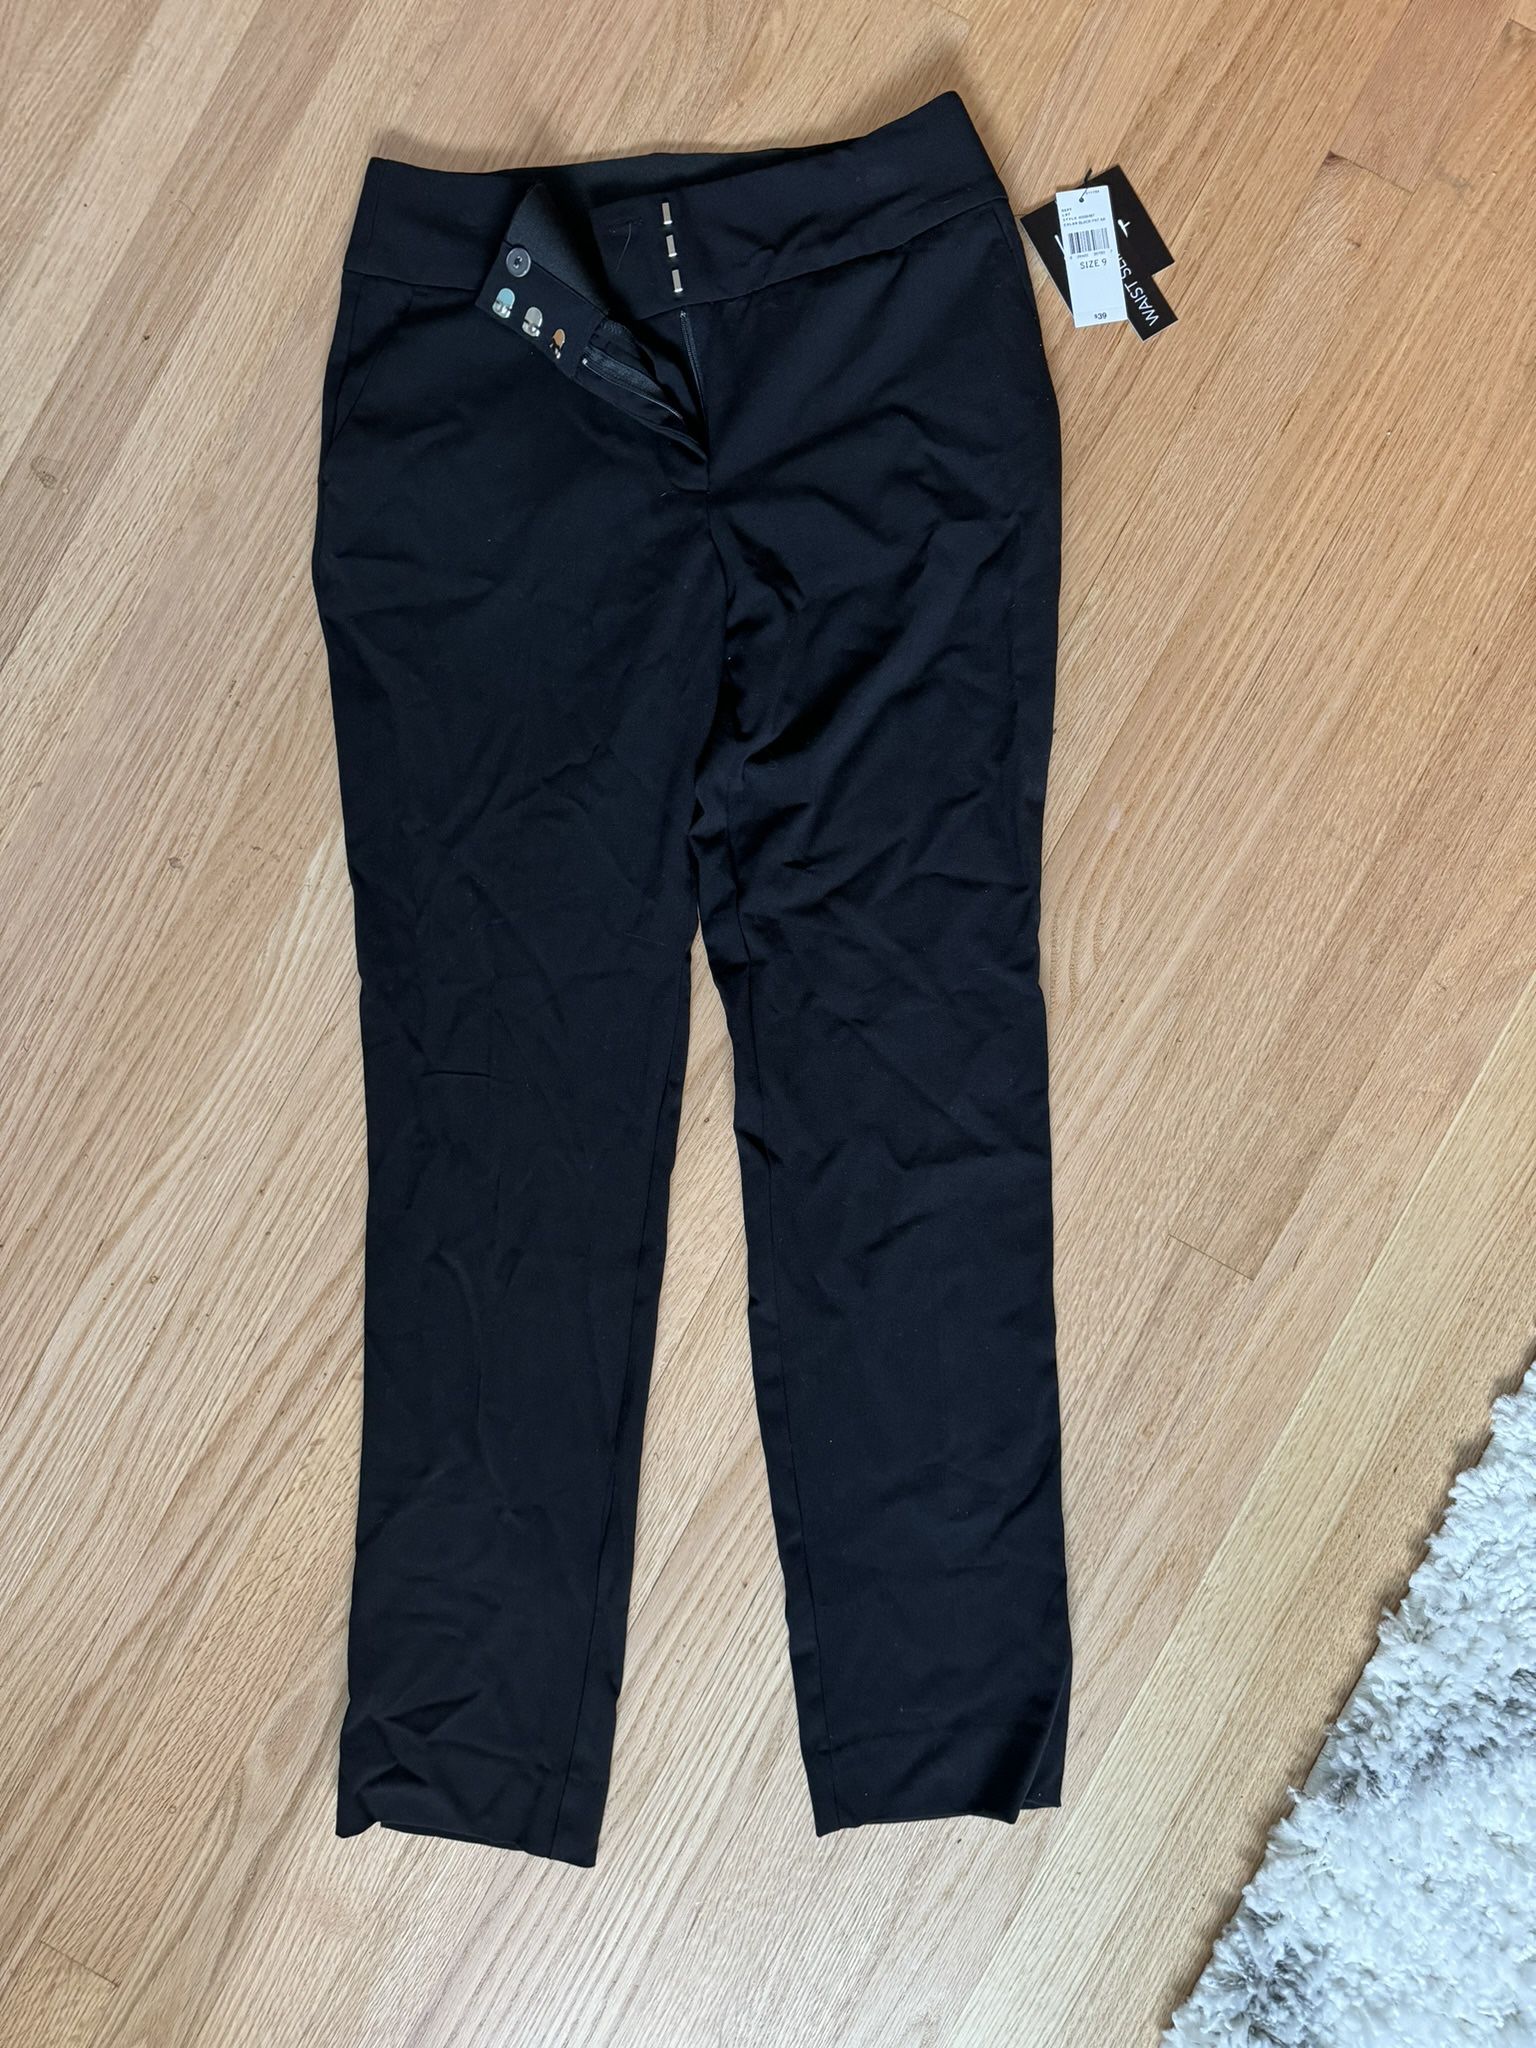 New Women’s Black Dress Pants (Size 9)